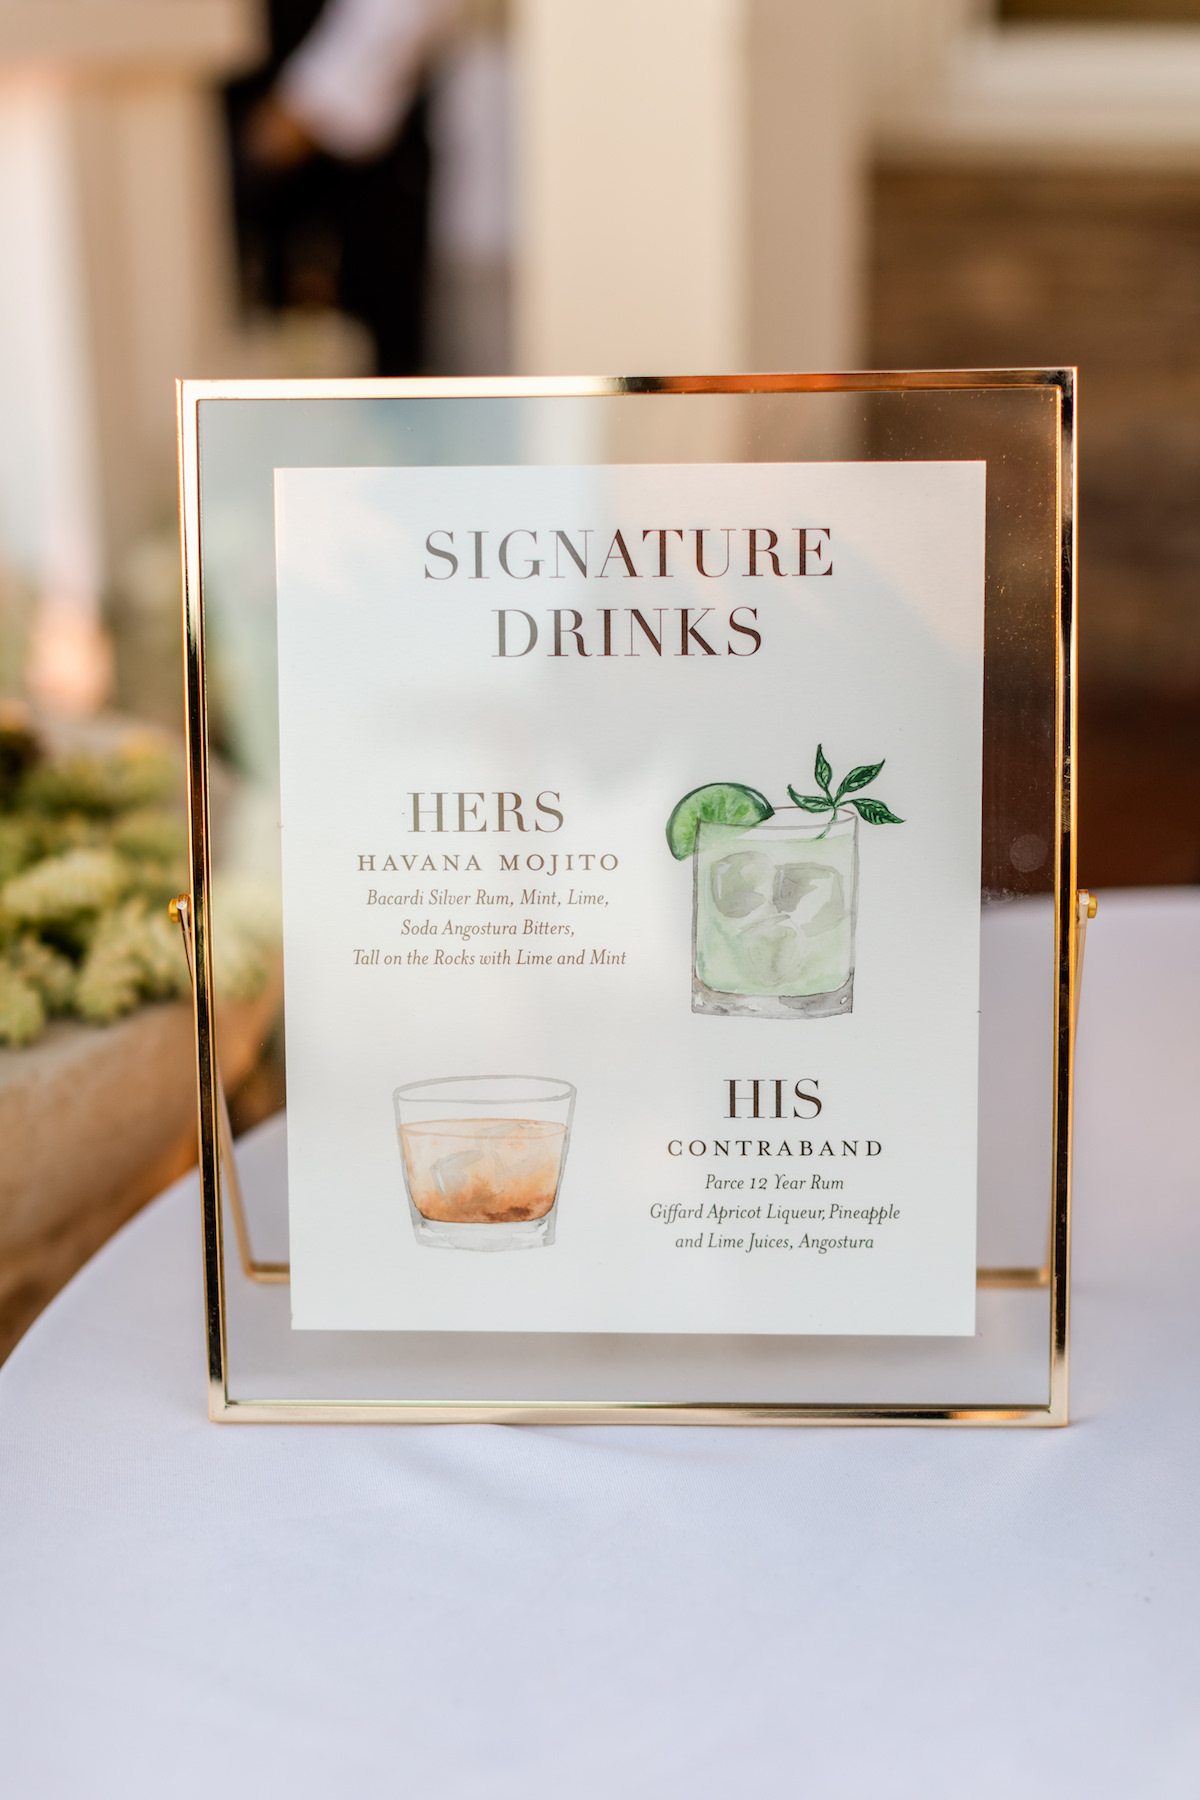 Wedding sign wit signature drinks - Holly Sigafoos Photo